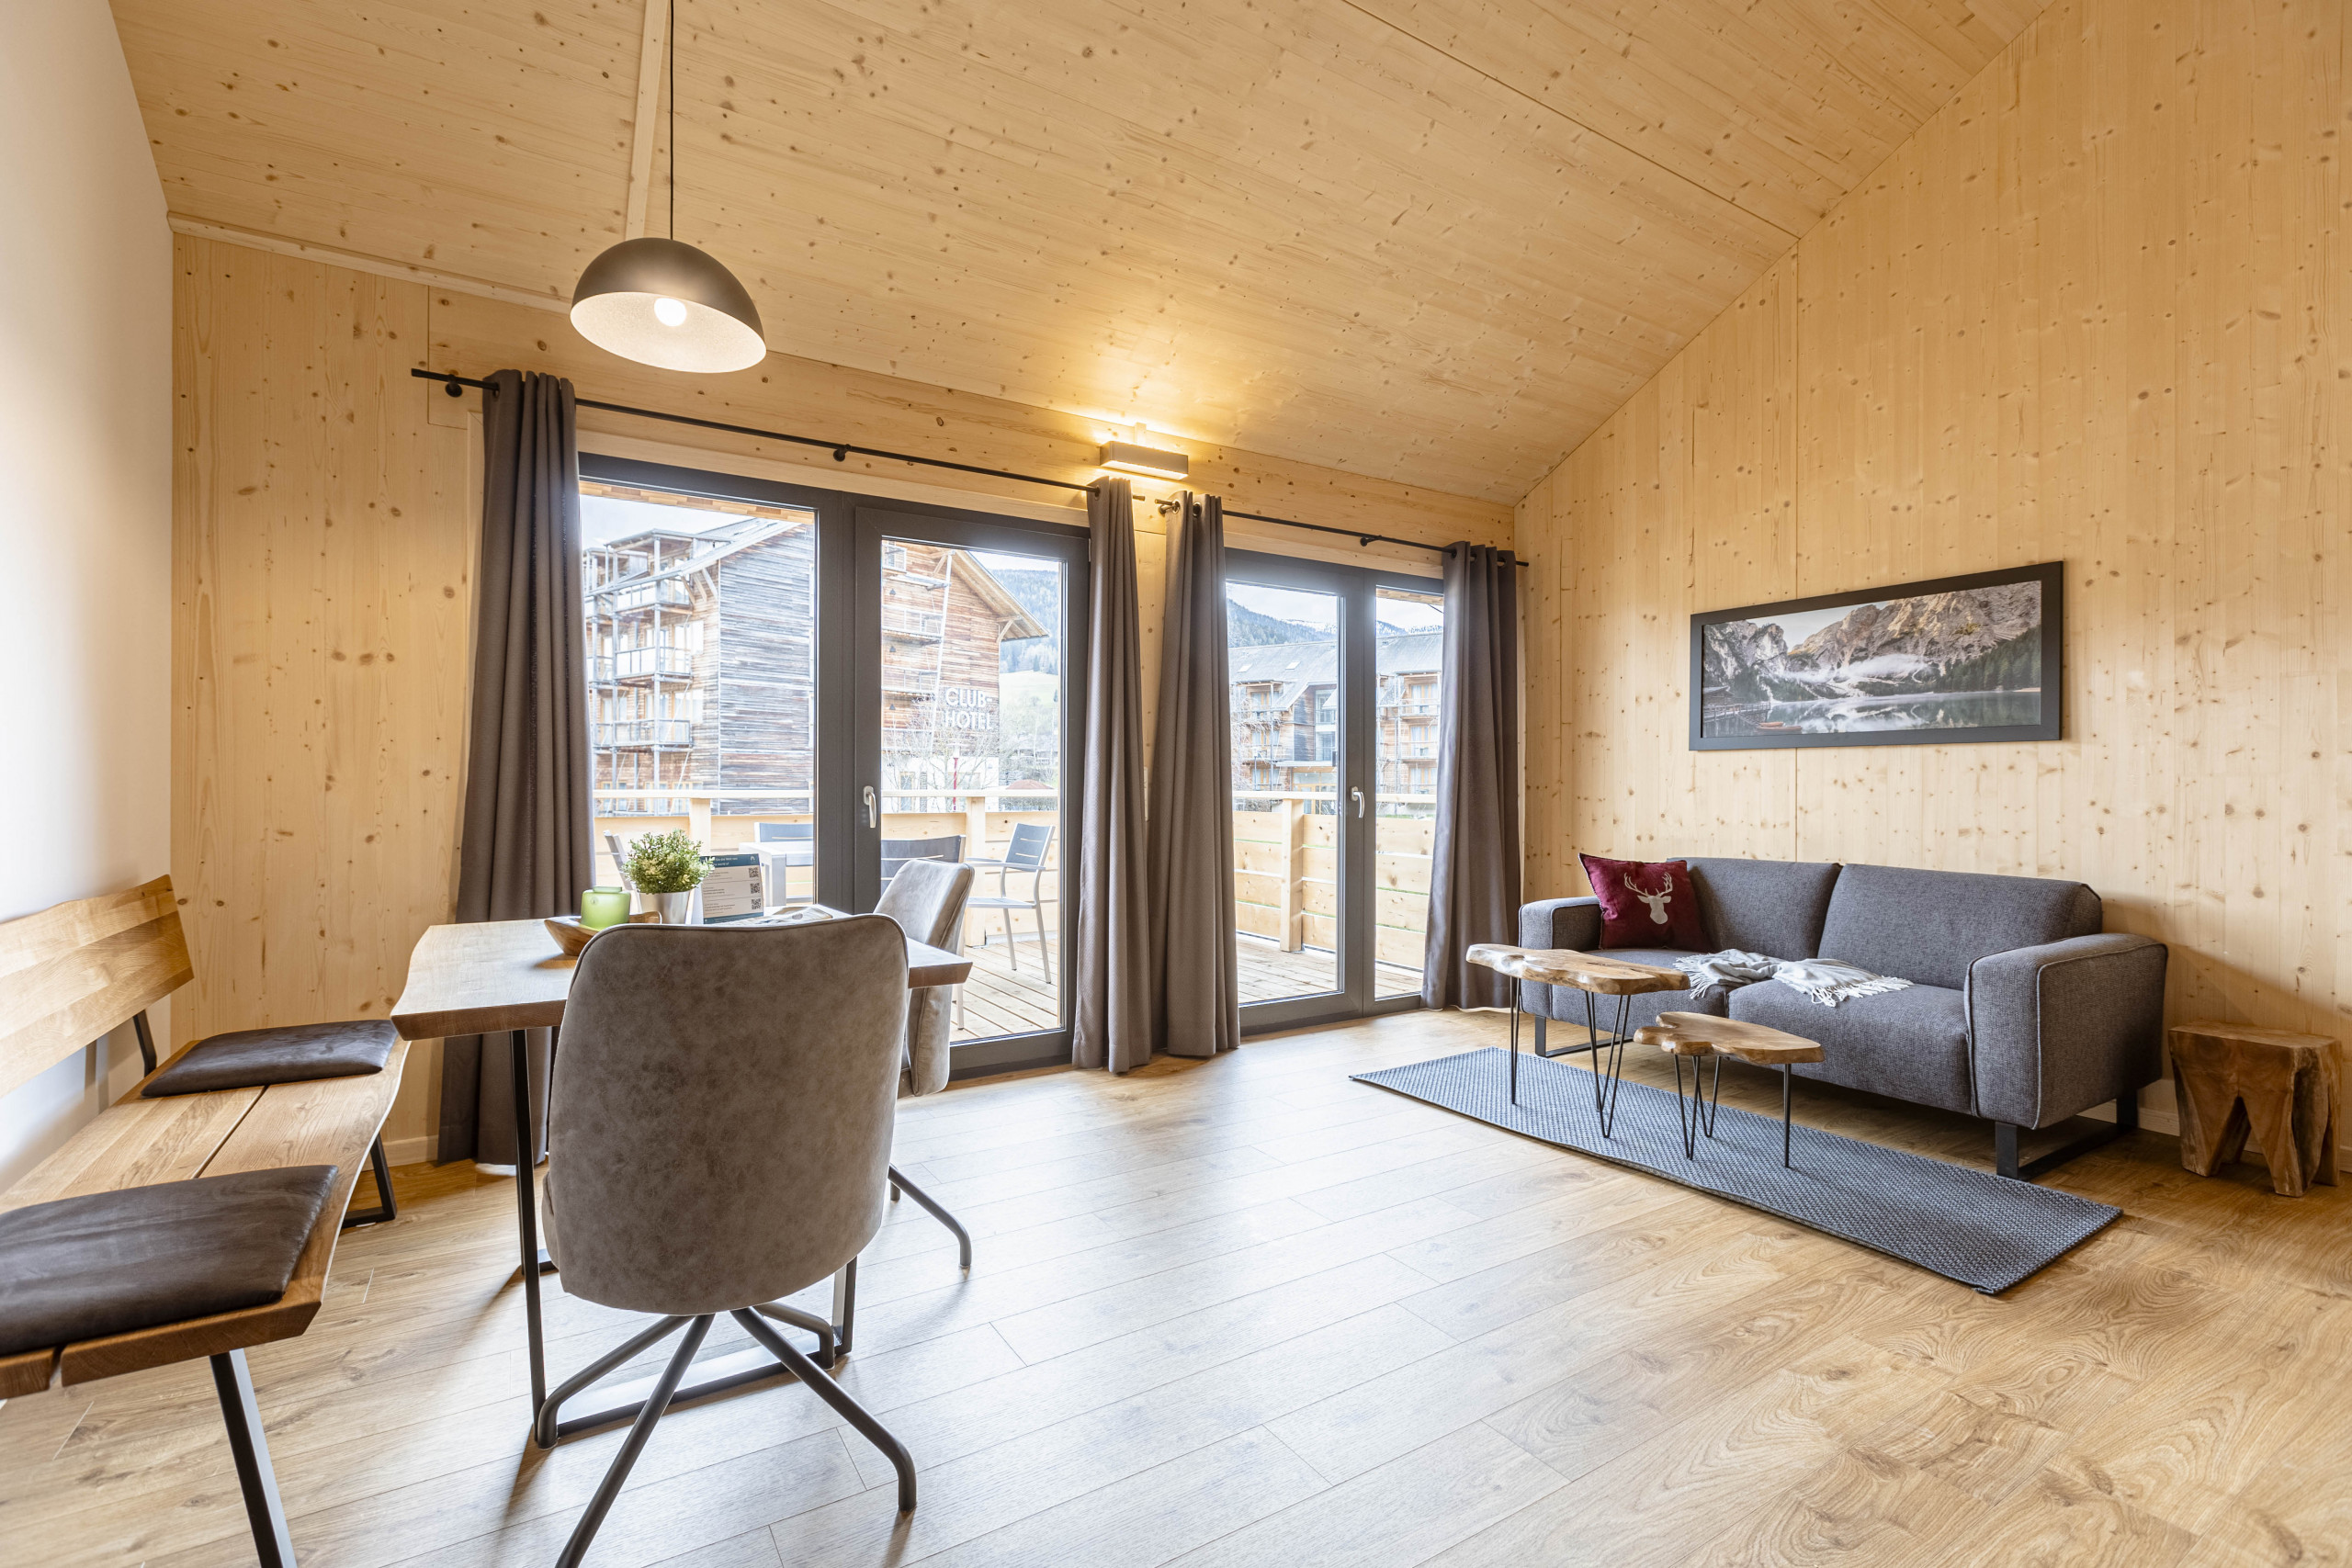  in St. Georgen am Kreischberg - Apartment with 1 bedroom & sauna